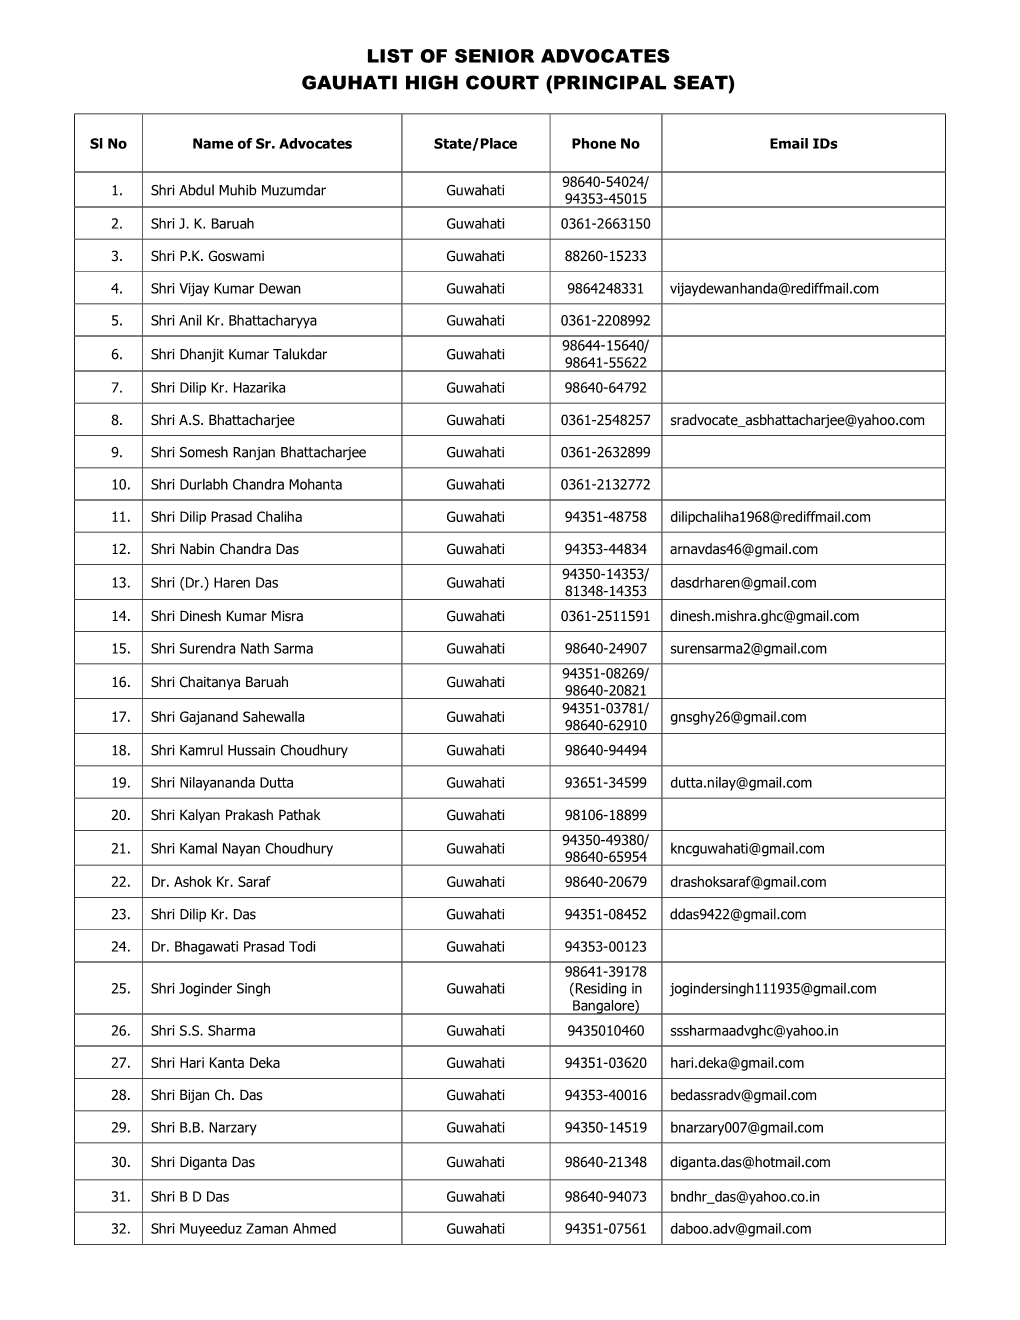 List of Senior Advocates Gauhati High Court (Principal Seat)